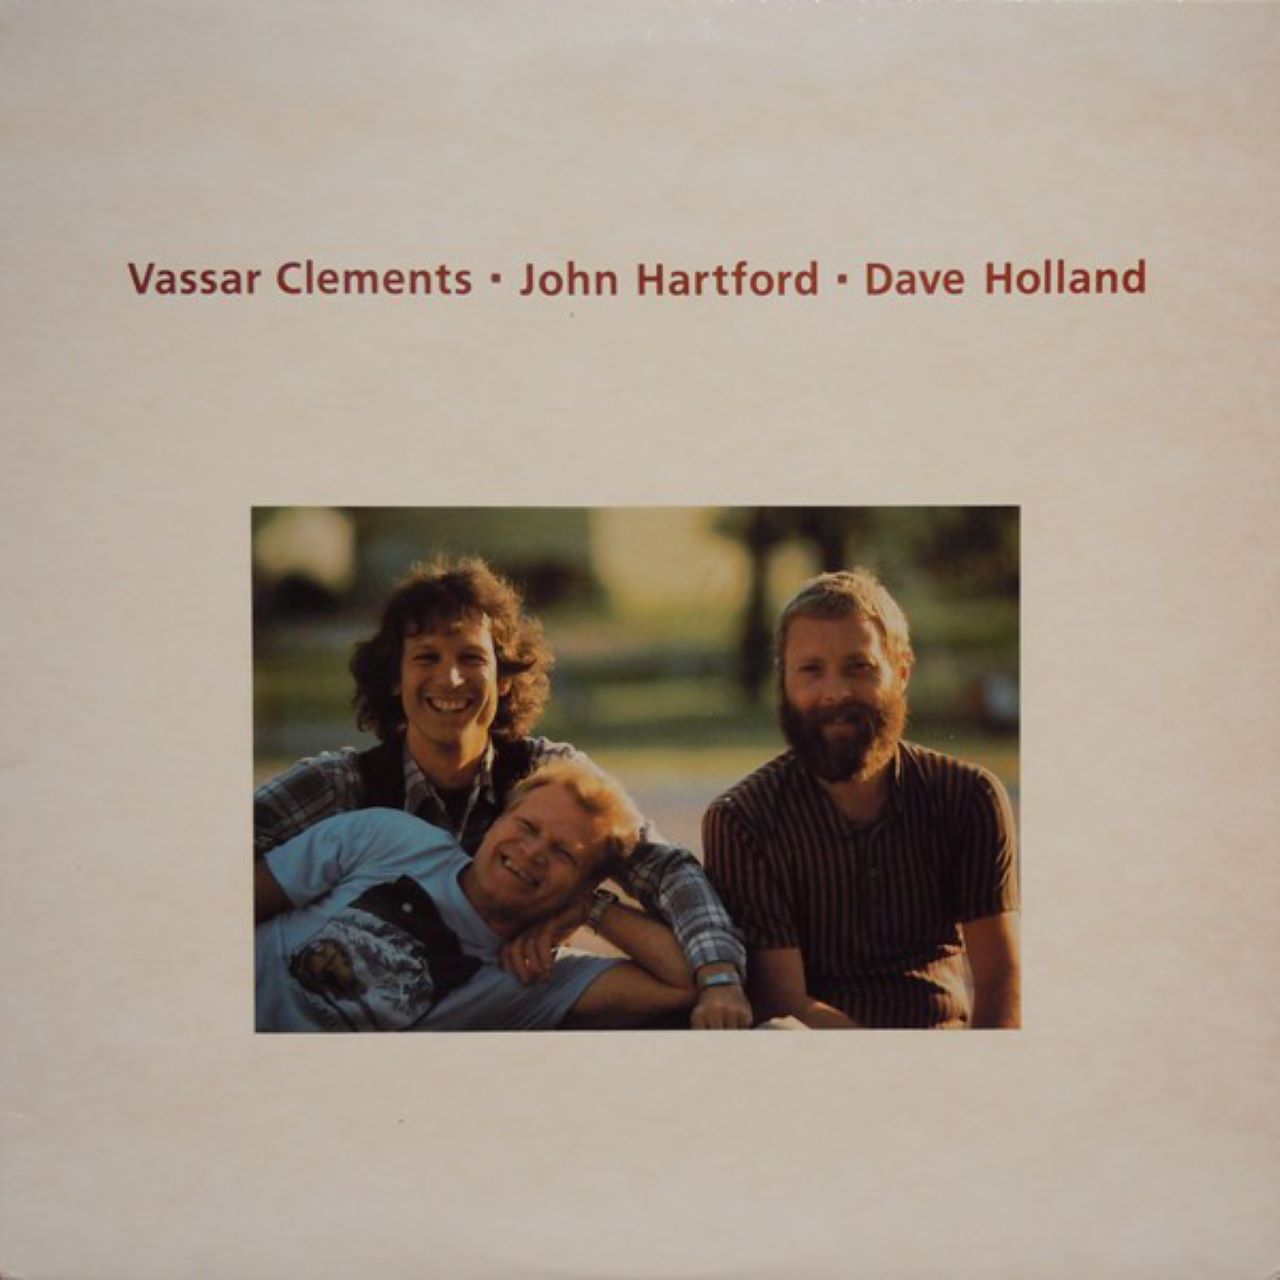 Vassar Clements, John Hartford, Dave Holland - Vassar Clements, John Hartford, Dave Holland cover album